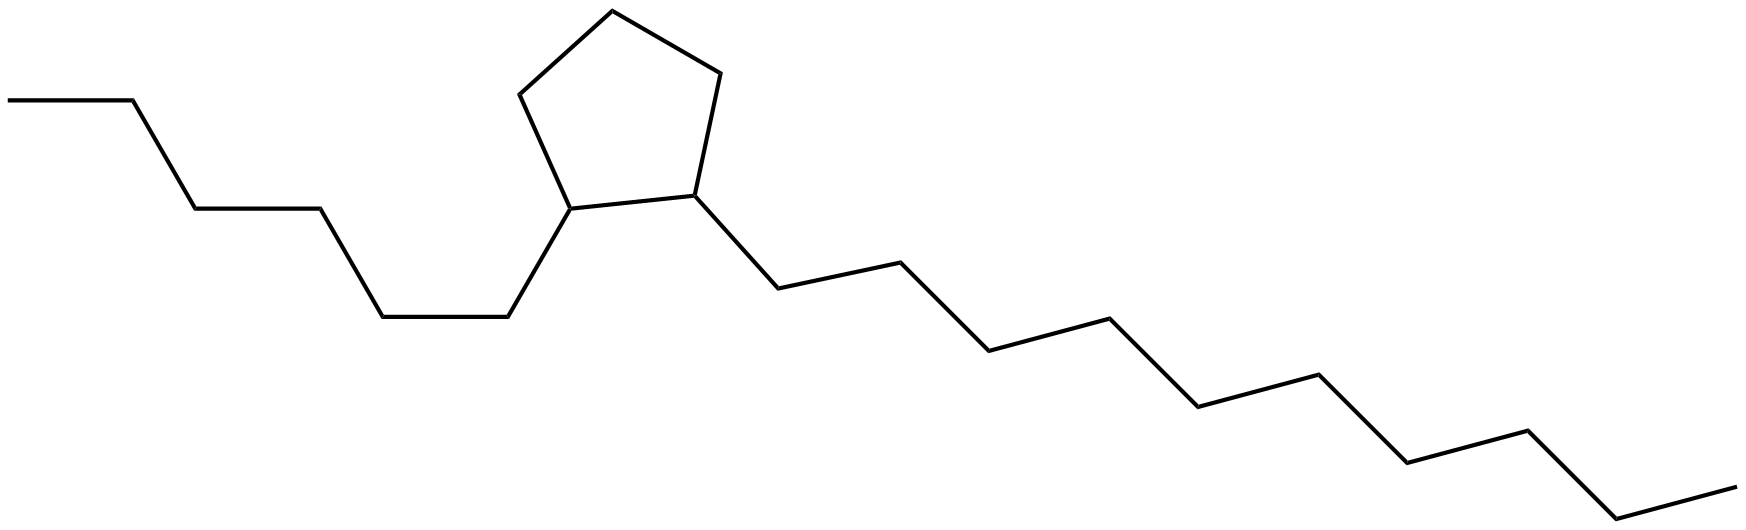 Image of 1-decyl-2-hexylcyclopentane